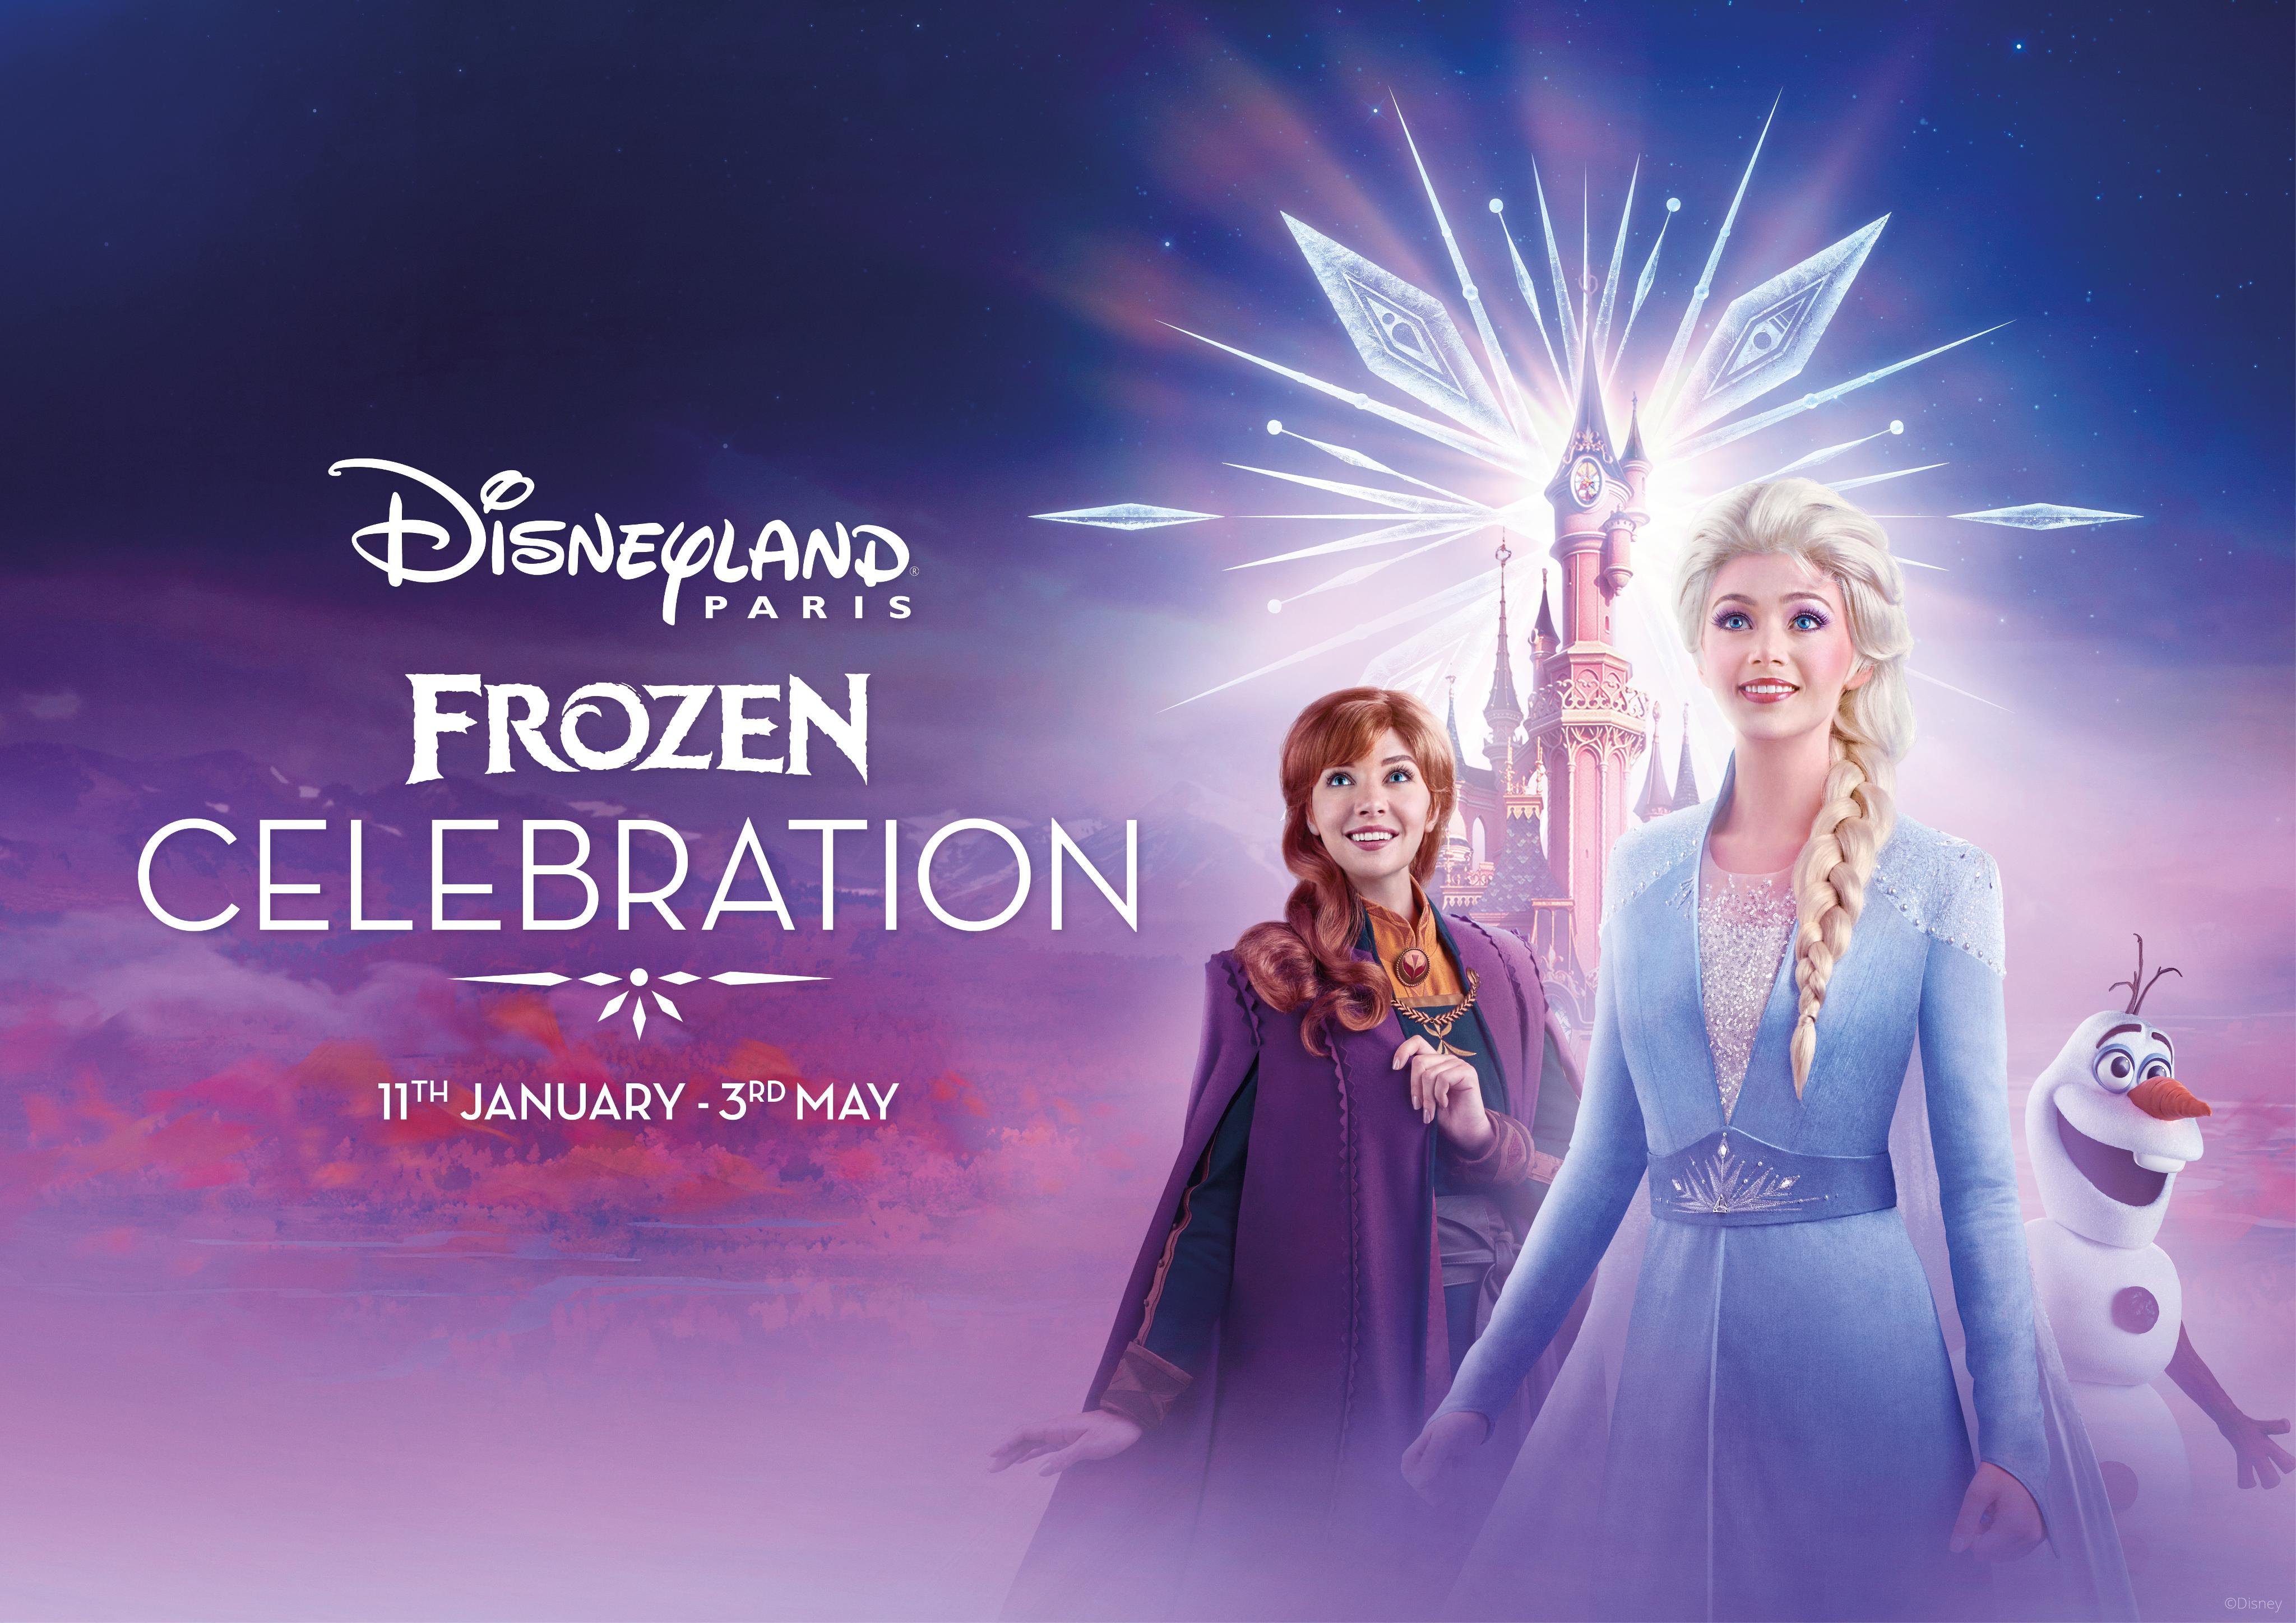 New Frozen Experiences Coming to Disneyland Paris